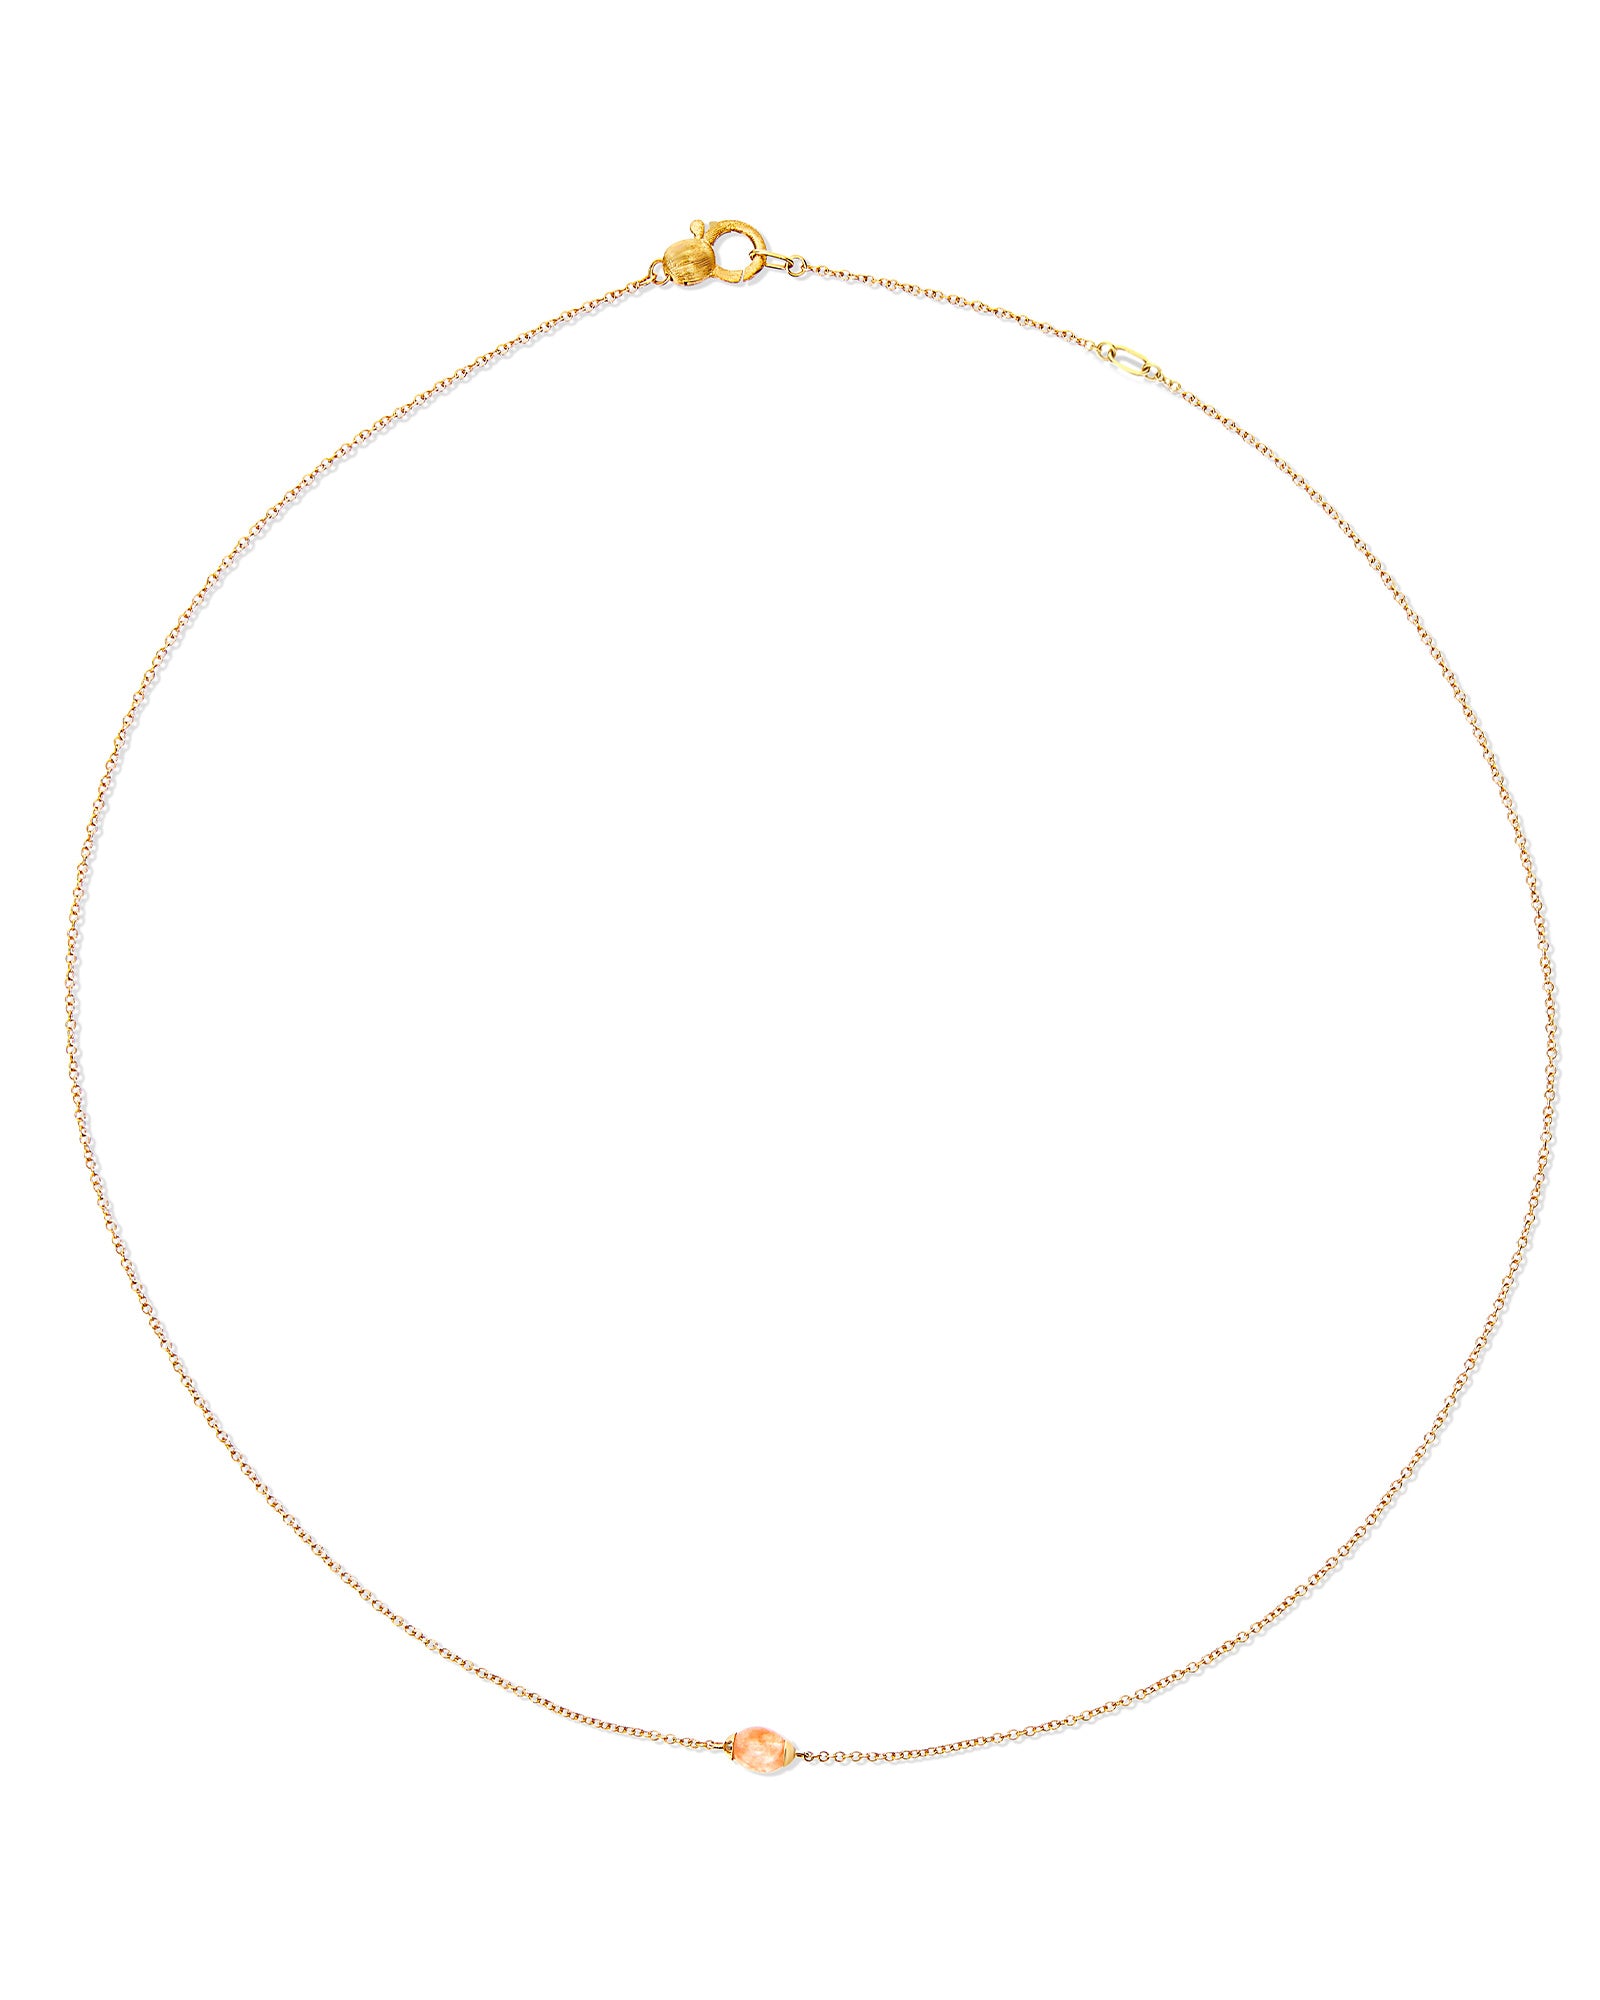 Petra "Amulets" Gold and Orange Aventurine Necklace (SMALL)